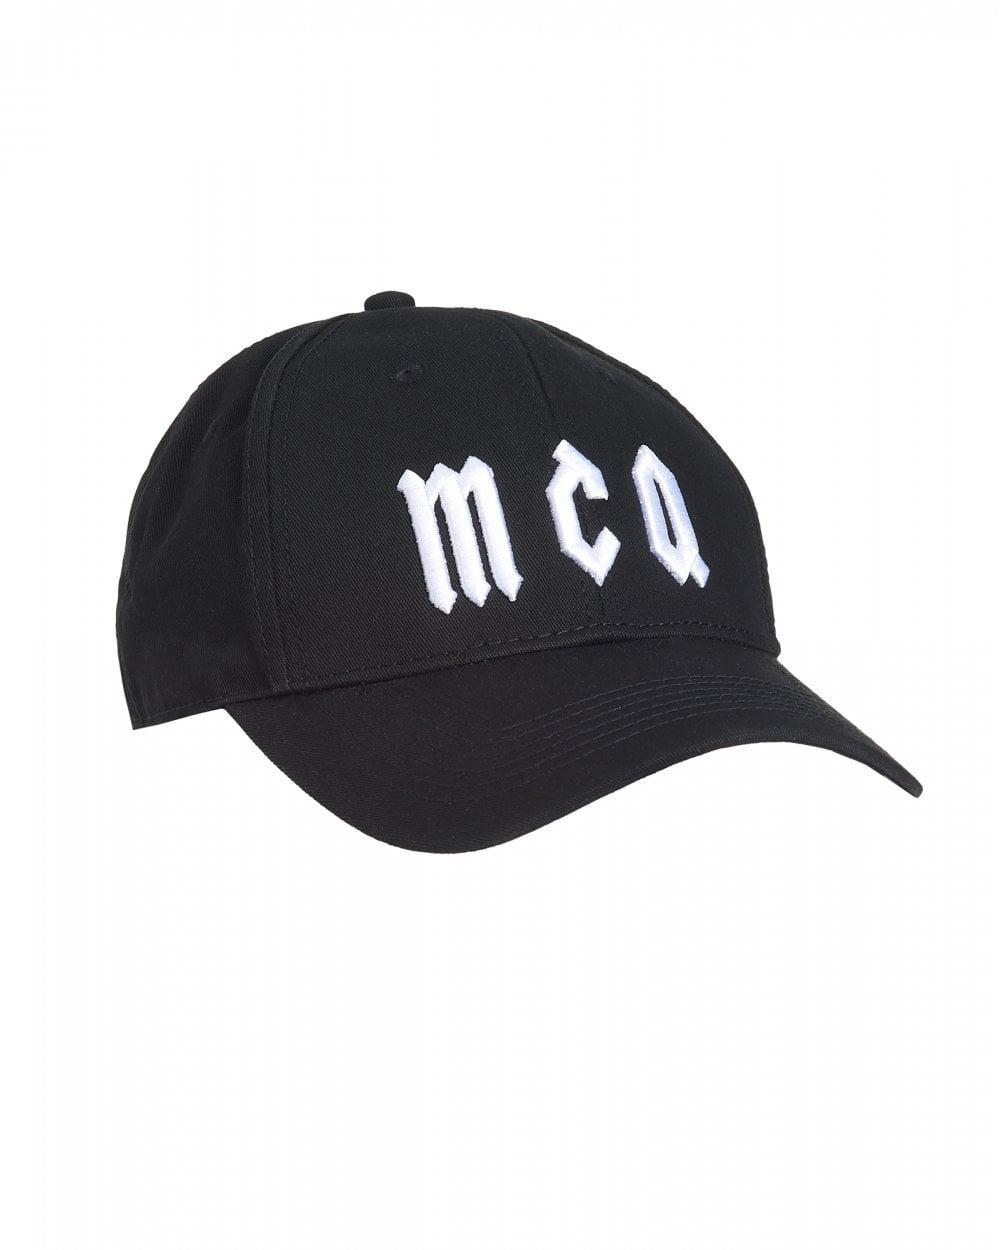 White Cap Logo - McQ by Alexander McQueen Mens Logo Baseball Hat, Black White Cap